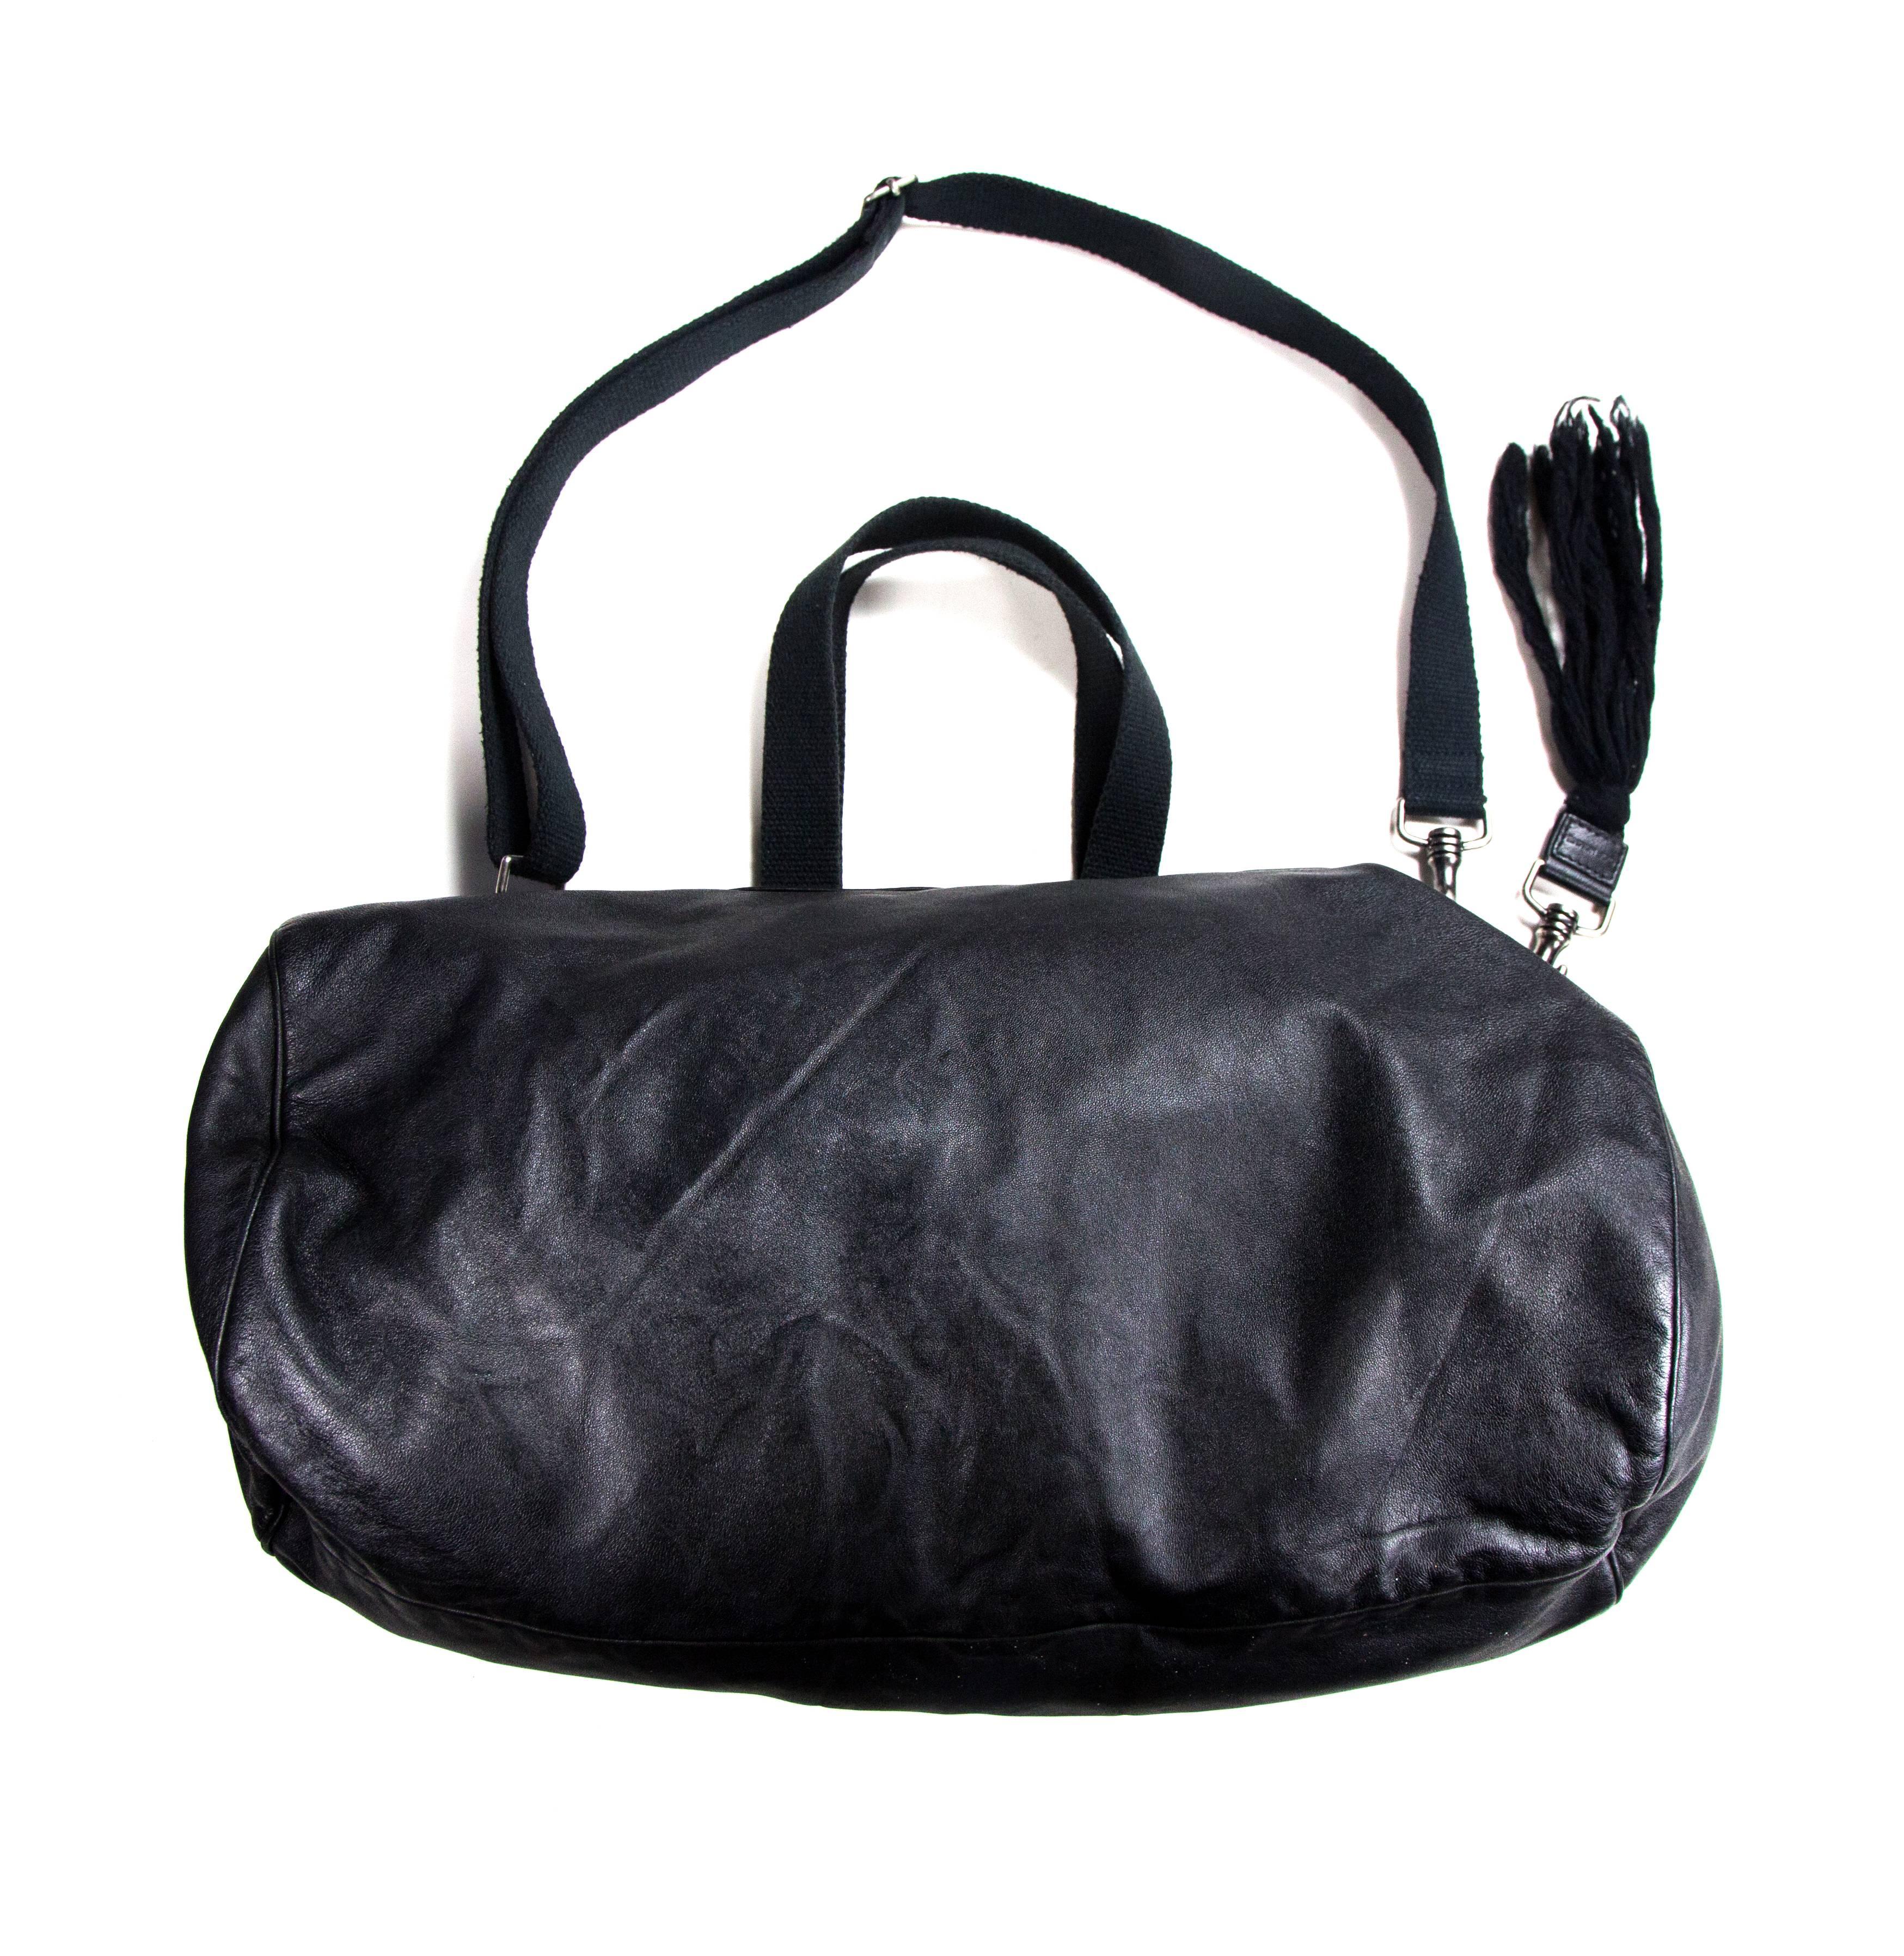 Dior Homme - Rare Deville Duffle Bag by Hedi Slimane

Color: Black

Material: Leather

------------------------------------------------------------

Details:

- silver tone hardware

- adjustable detachable shoulder strap

- four